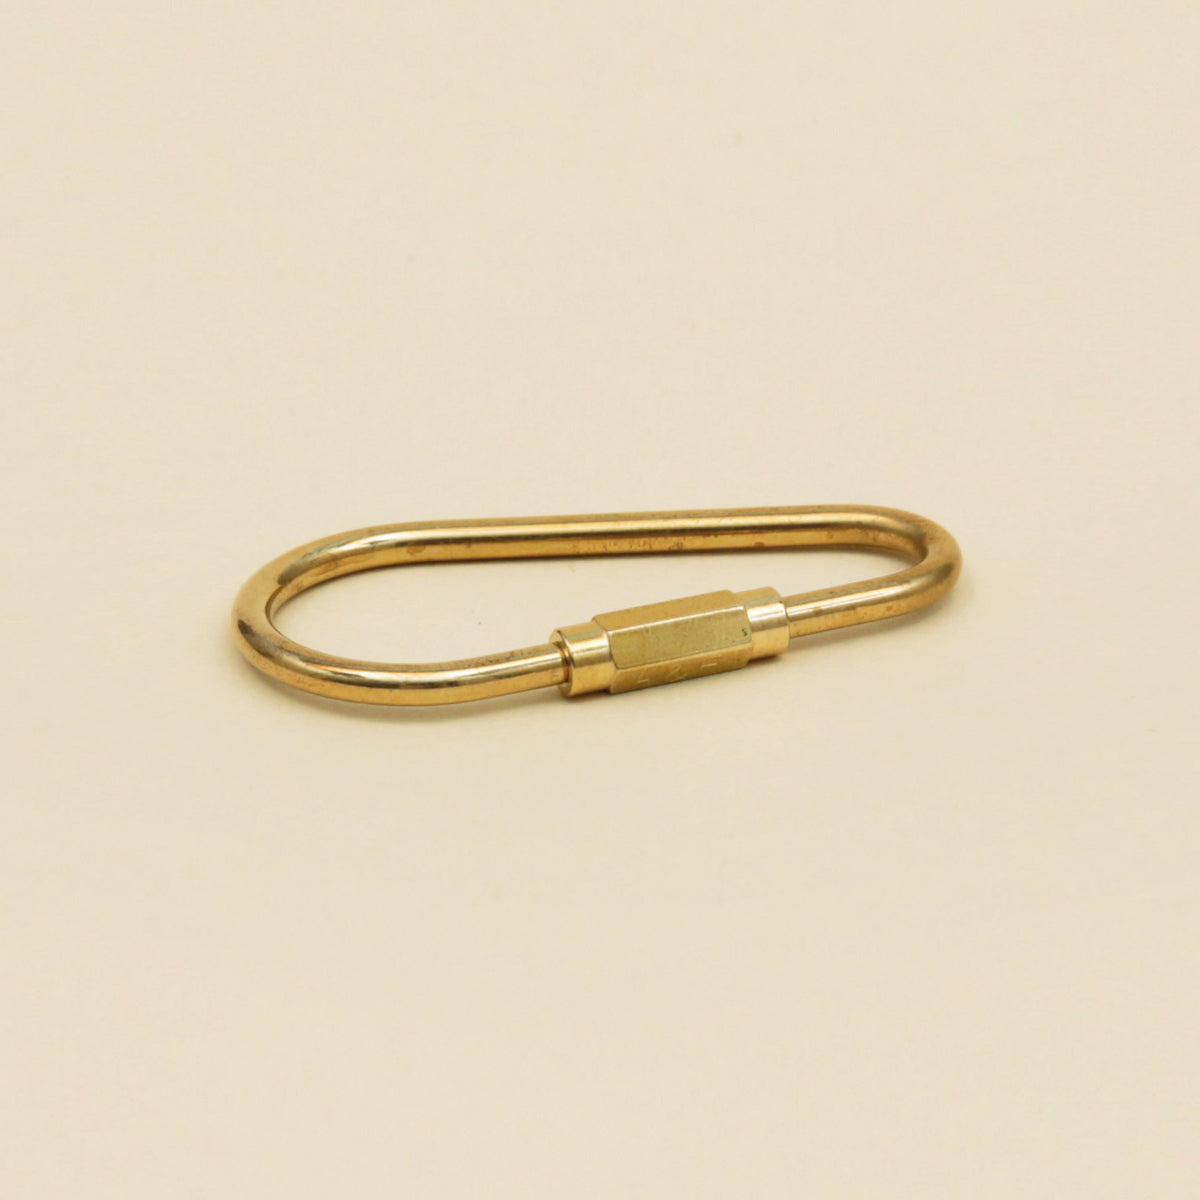 Brass Key Ring - Set of 2